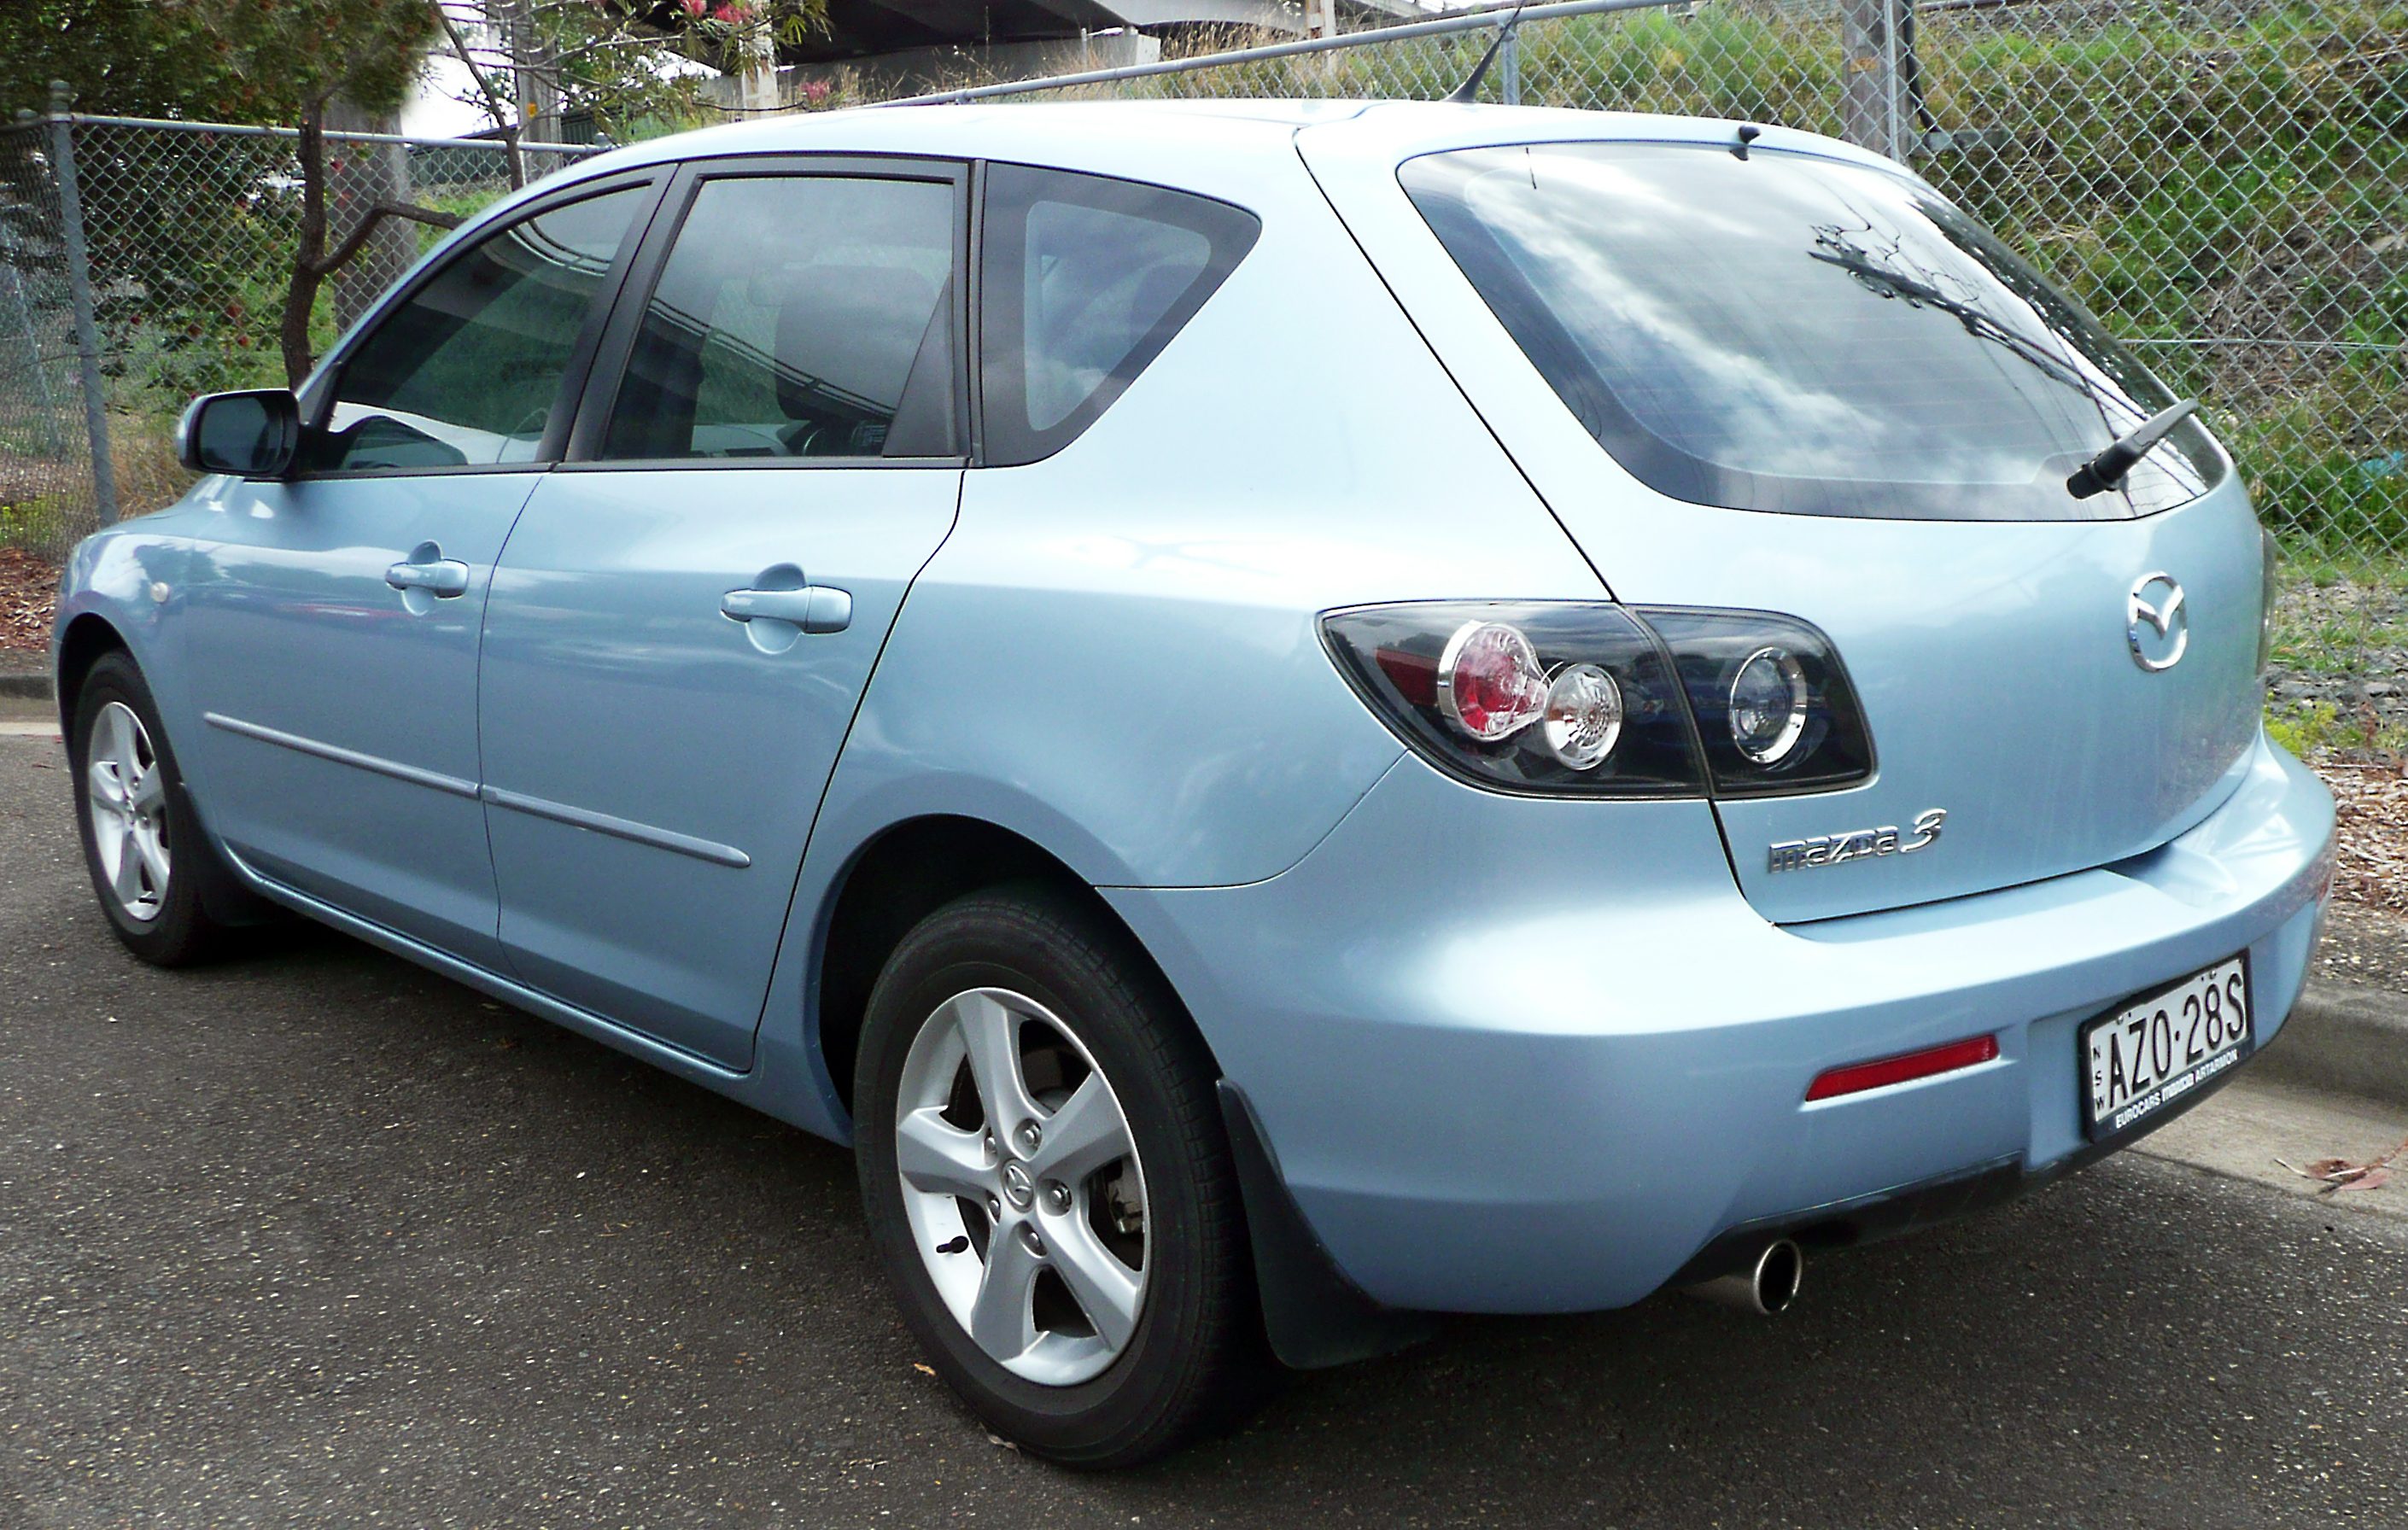 Мазда хэтчбек 2006. Mazda 3 BK 2008 хэтчбек. Mazda 3 2006 хэтчбек. Мазда 3 хэтчбек 2008. Мазда 3 хэтчбек 2006 - 2008.